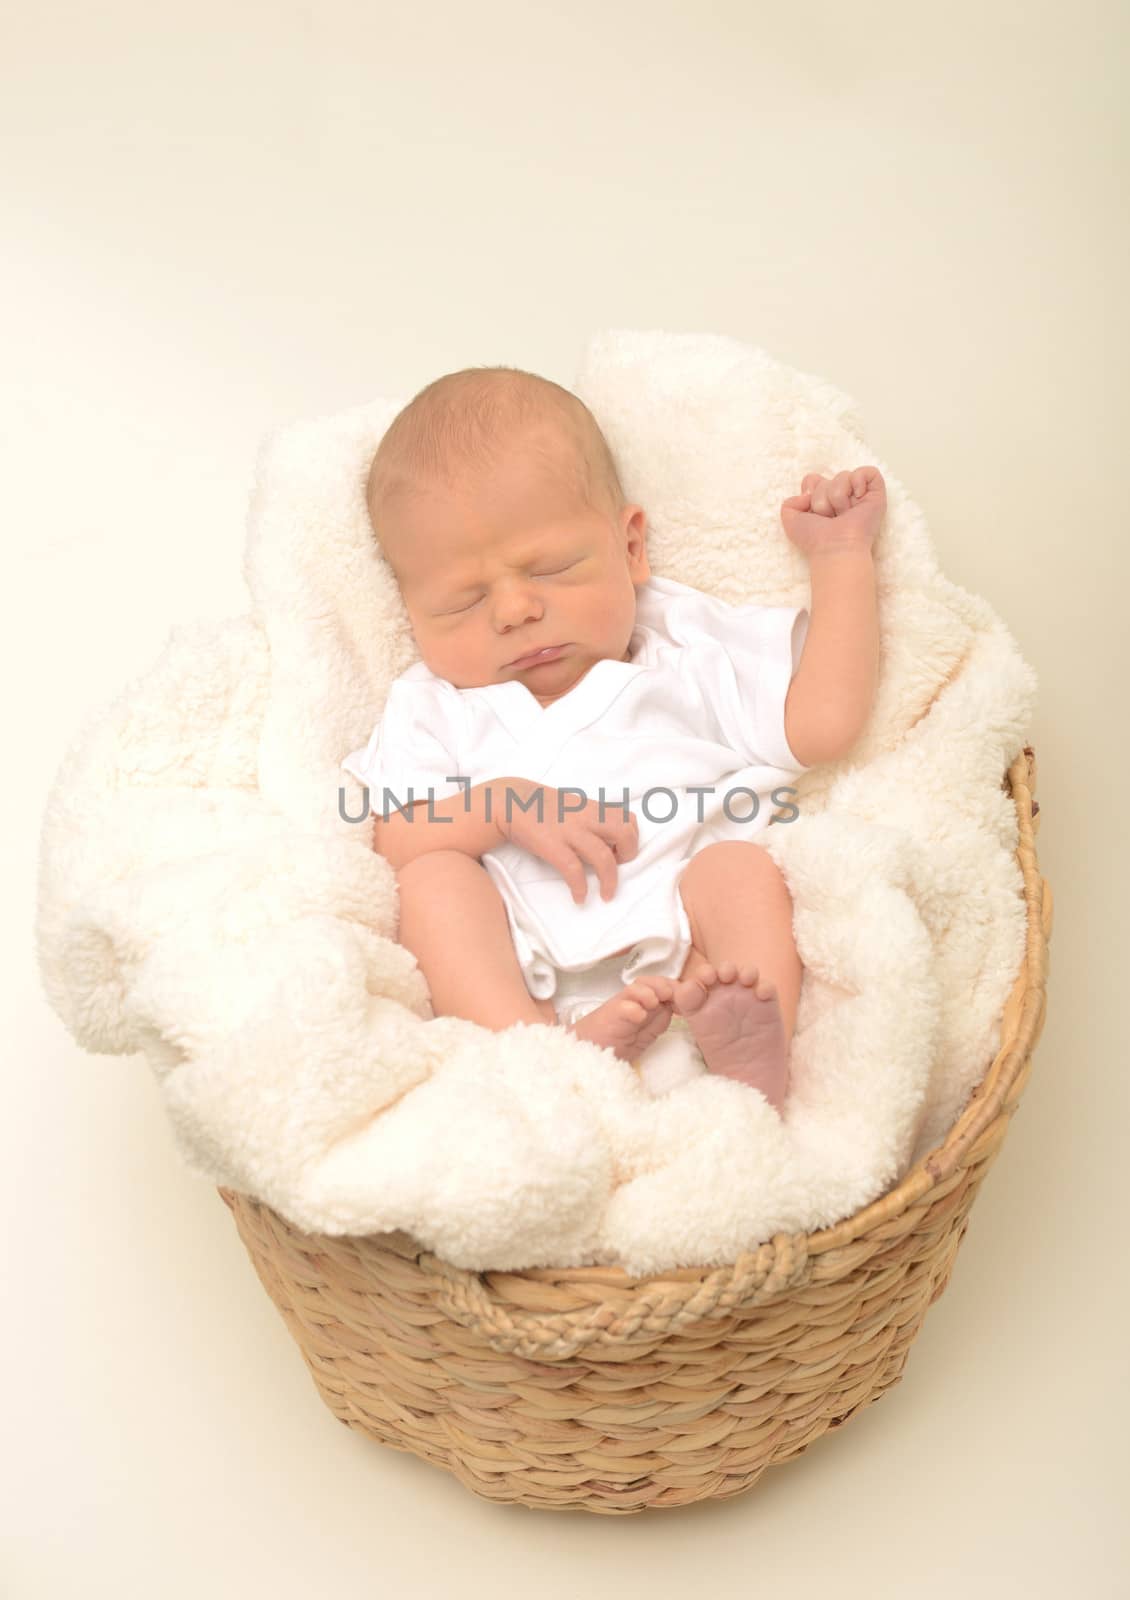 peaceful newborn baby or infant sleeping in basket